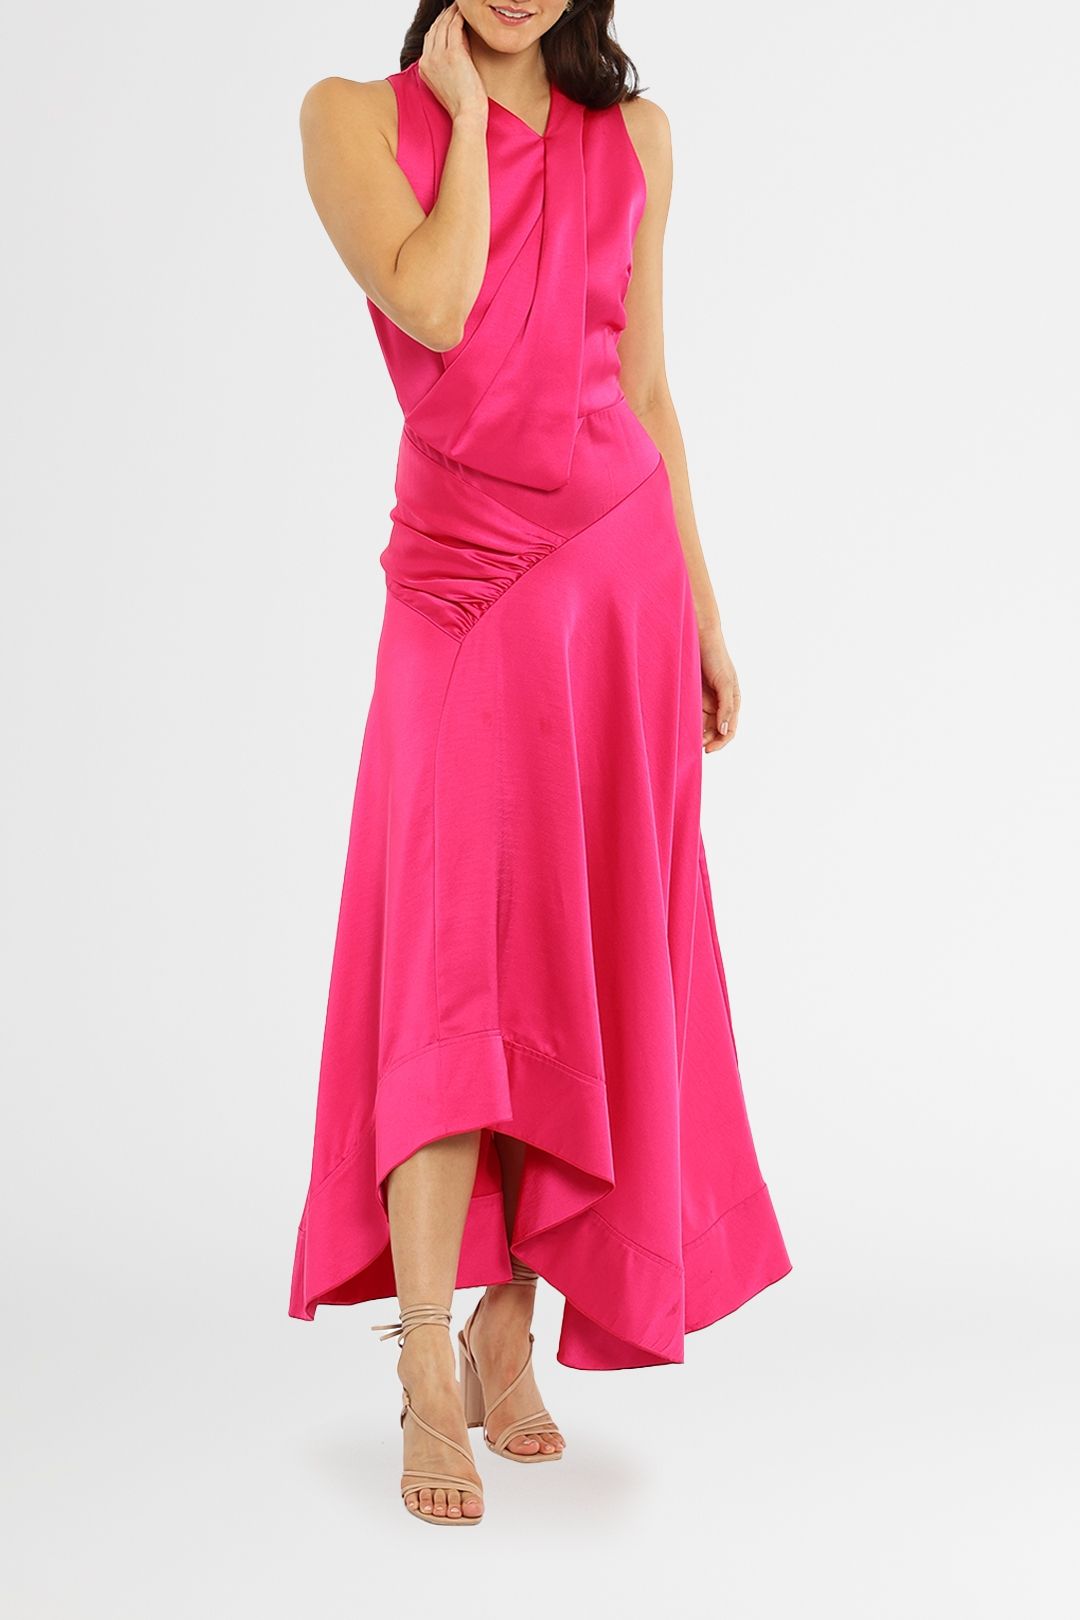 Acler Palmera Dress Pink